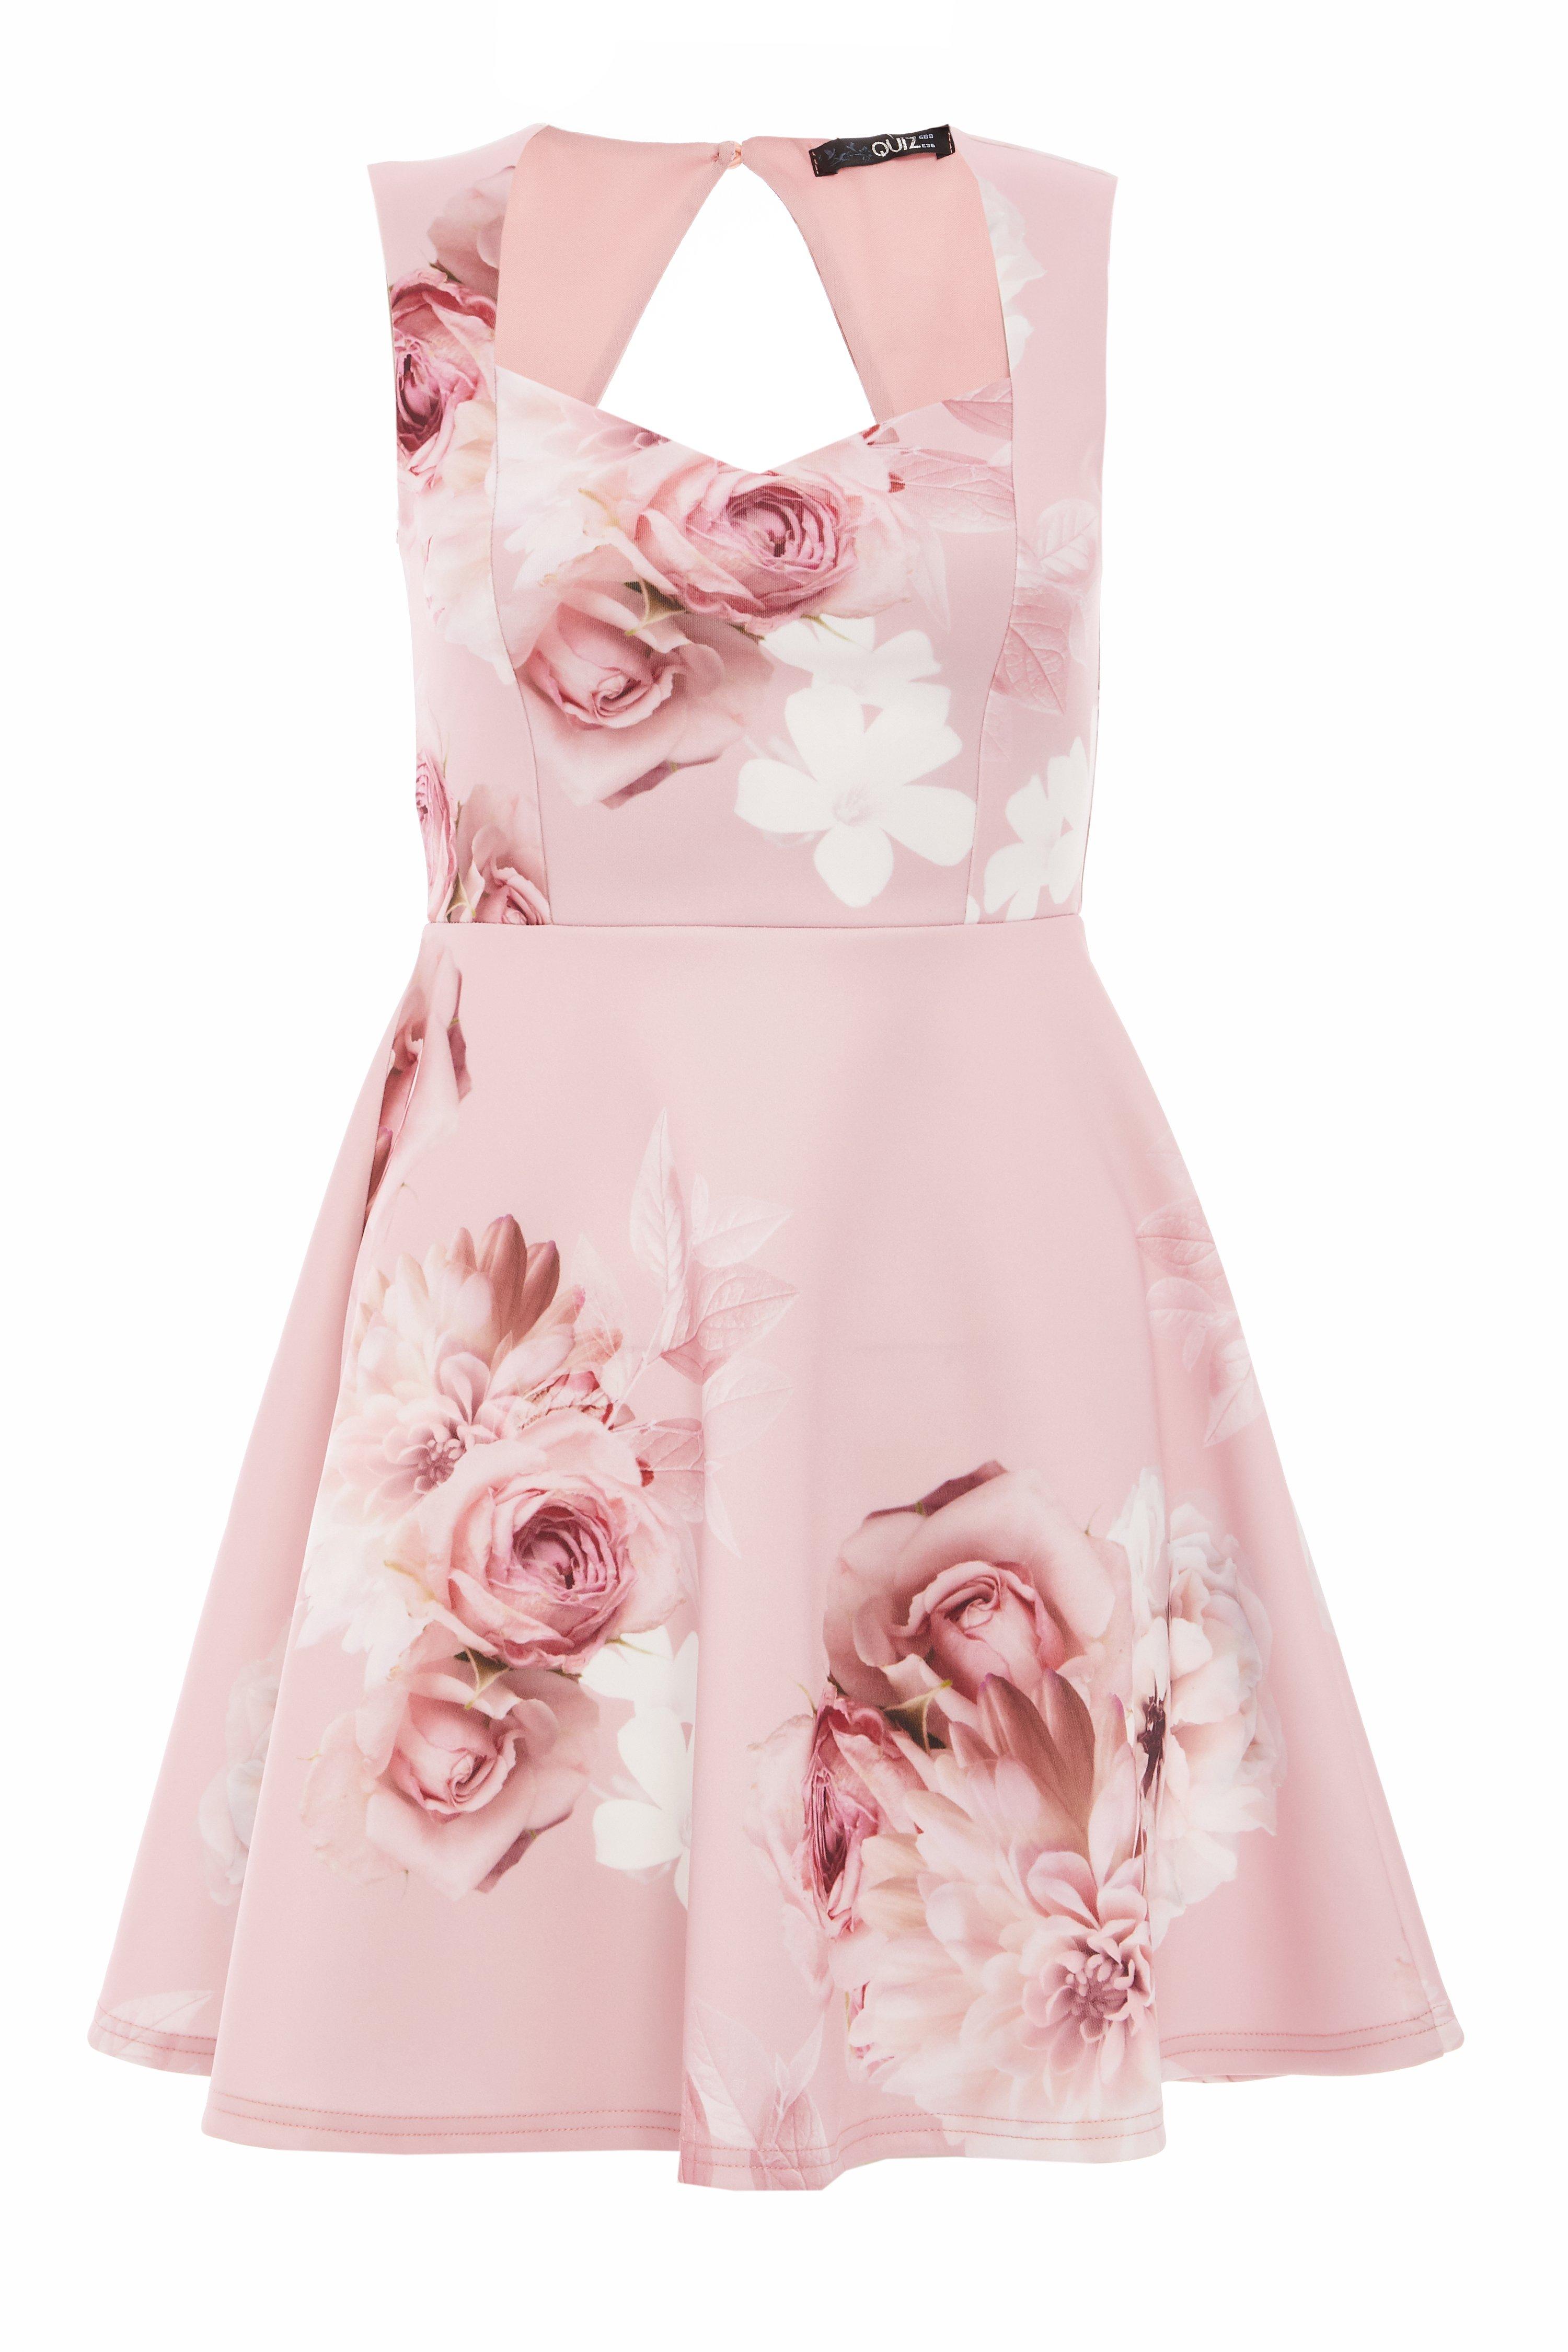 Petite Pink Floral Skater Dress - Quiz Clothing